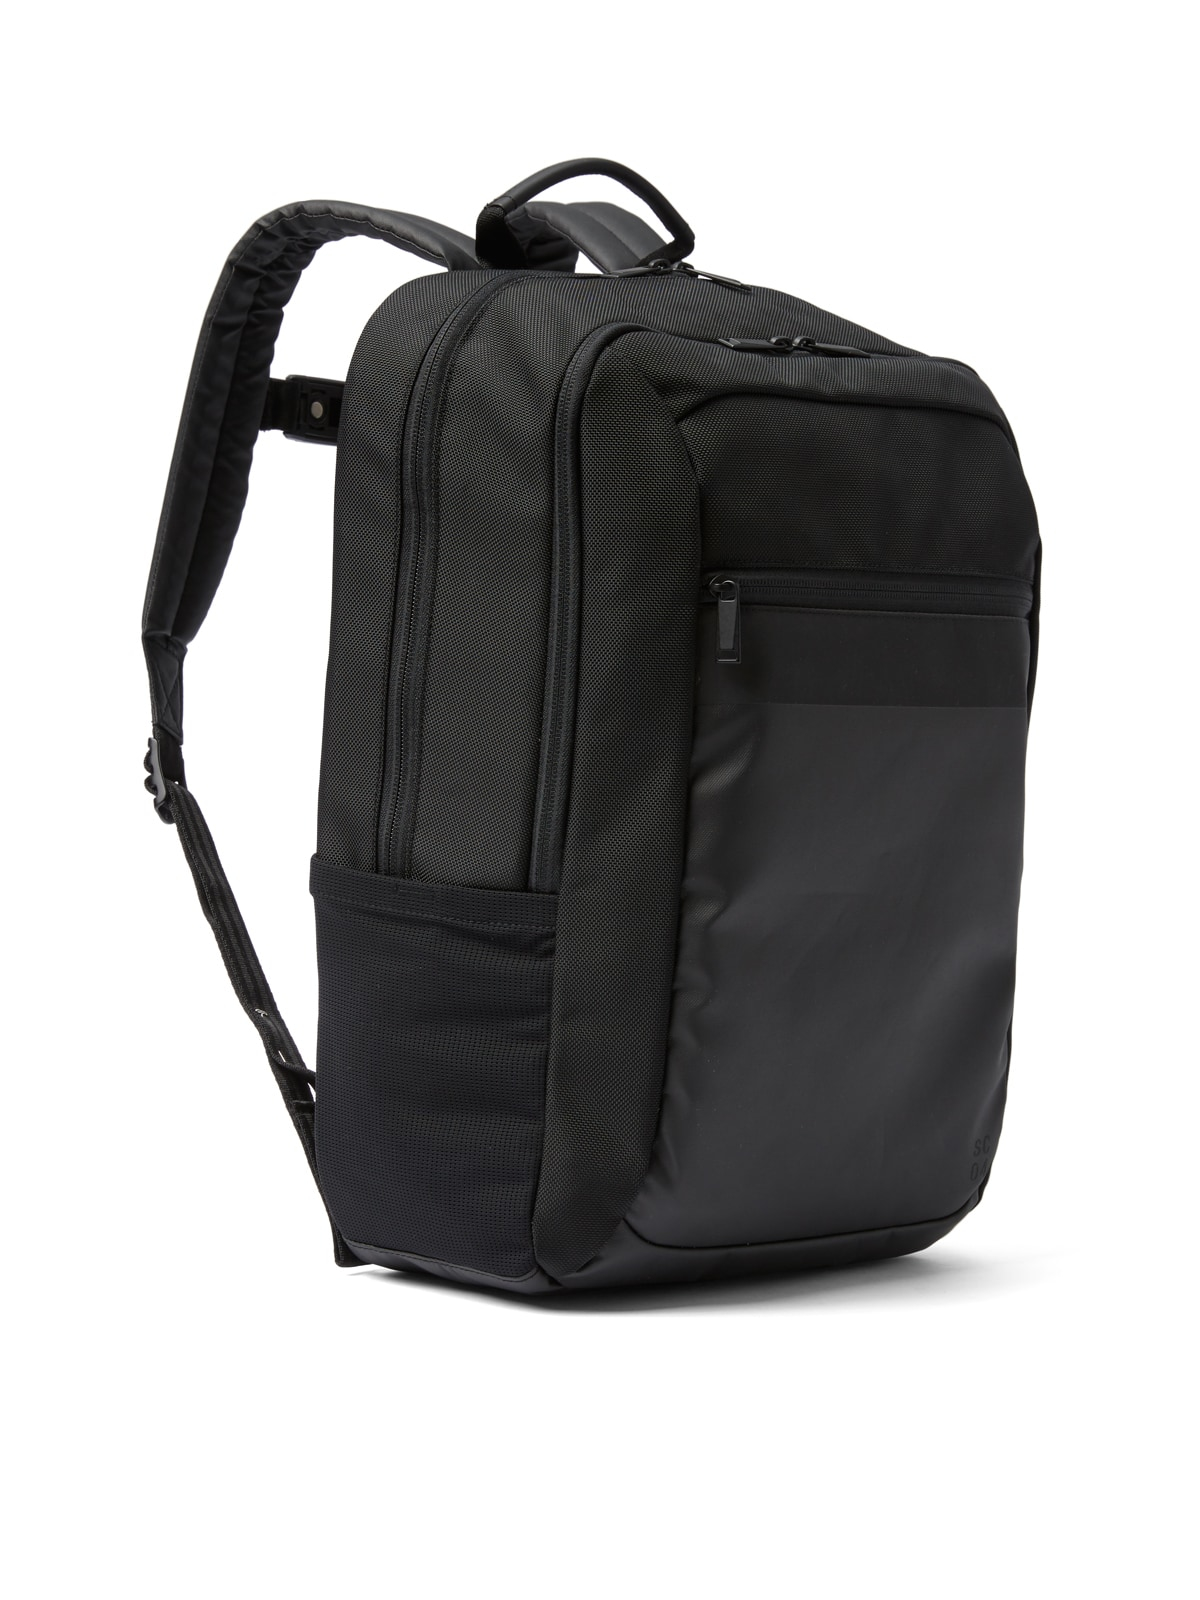 Lyst - Frank And Oak Frank + Oak Sc Commuter Backpack In Black/grey for Men